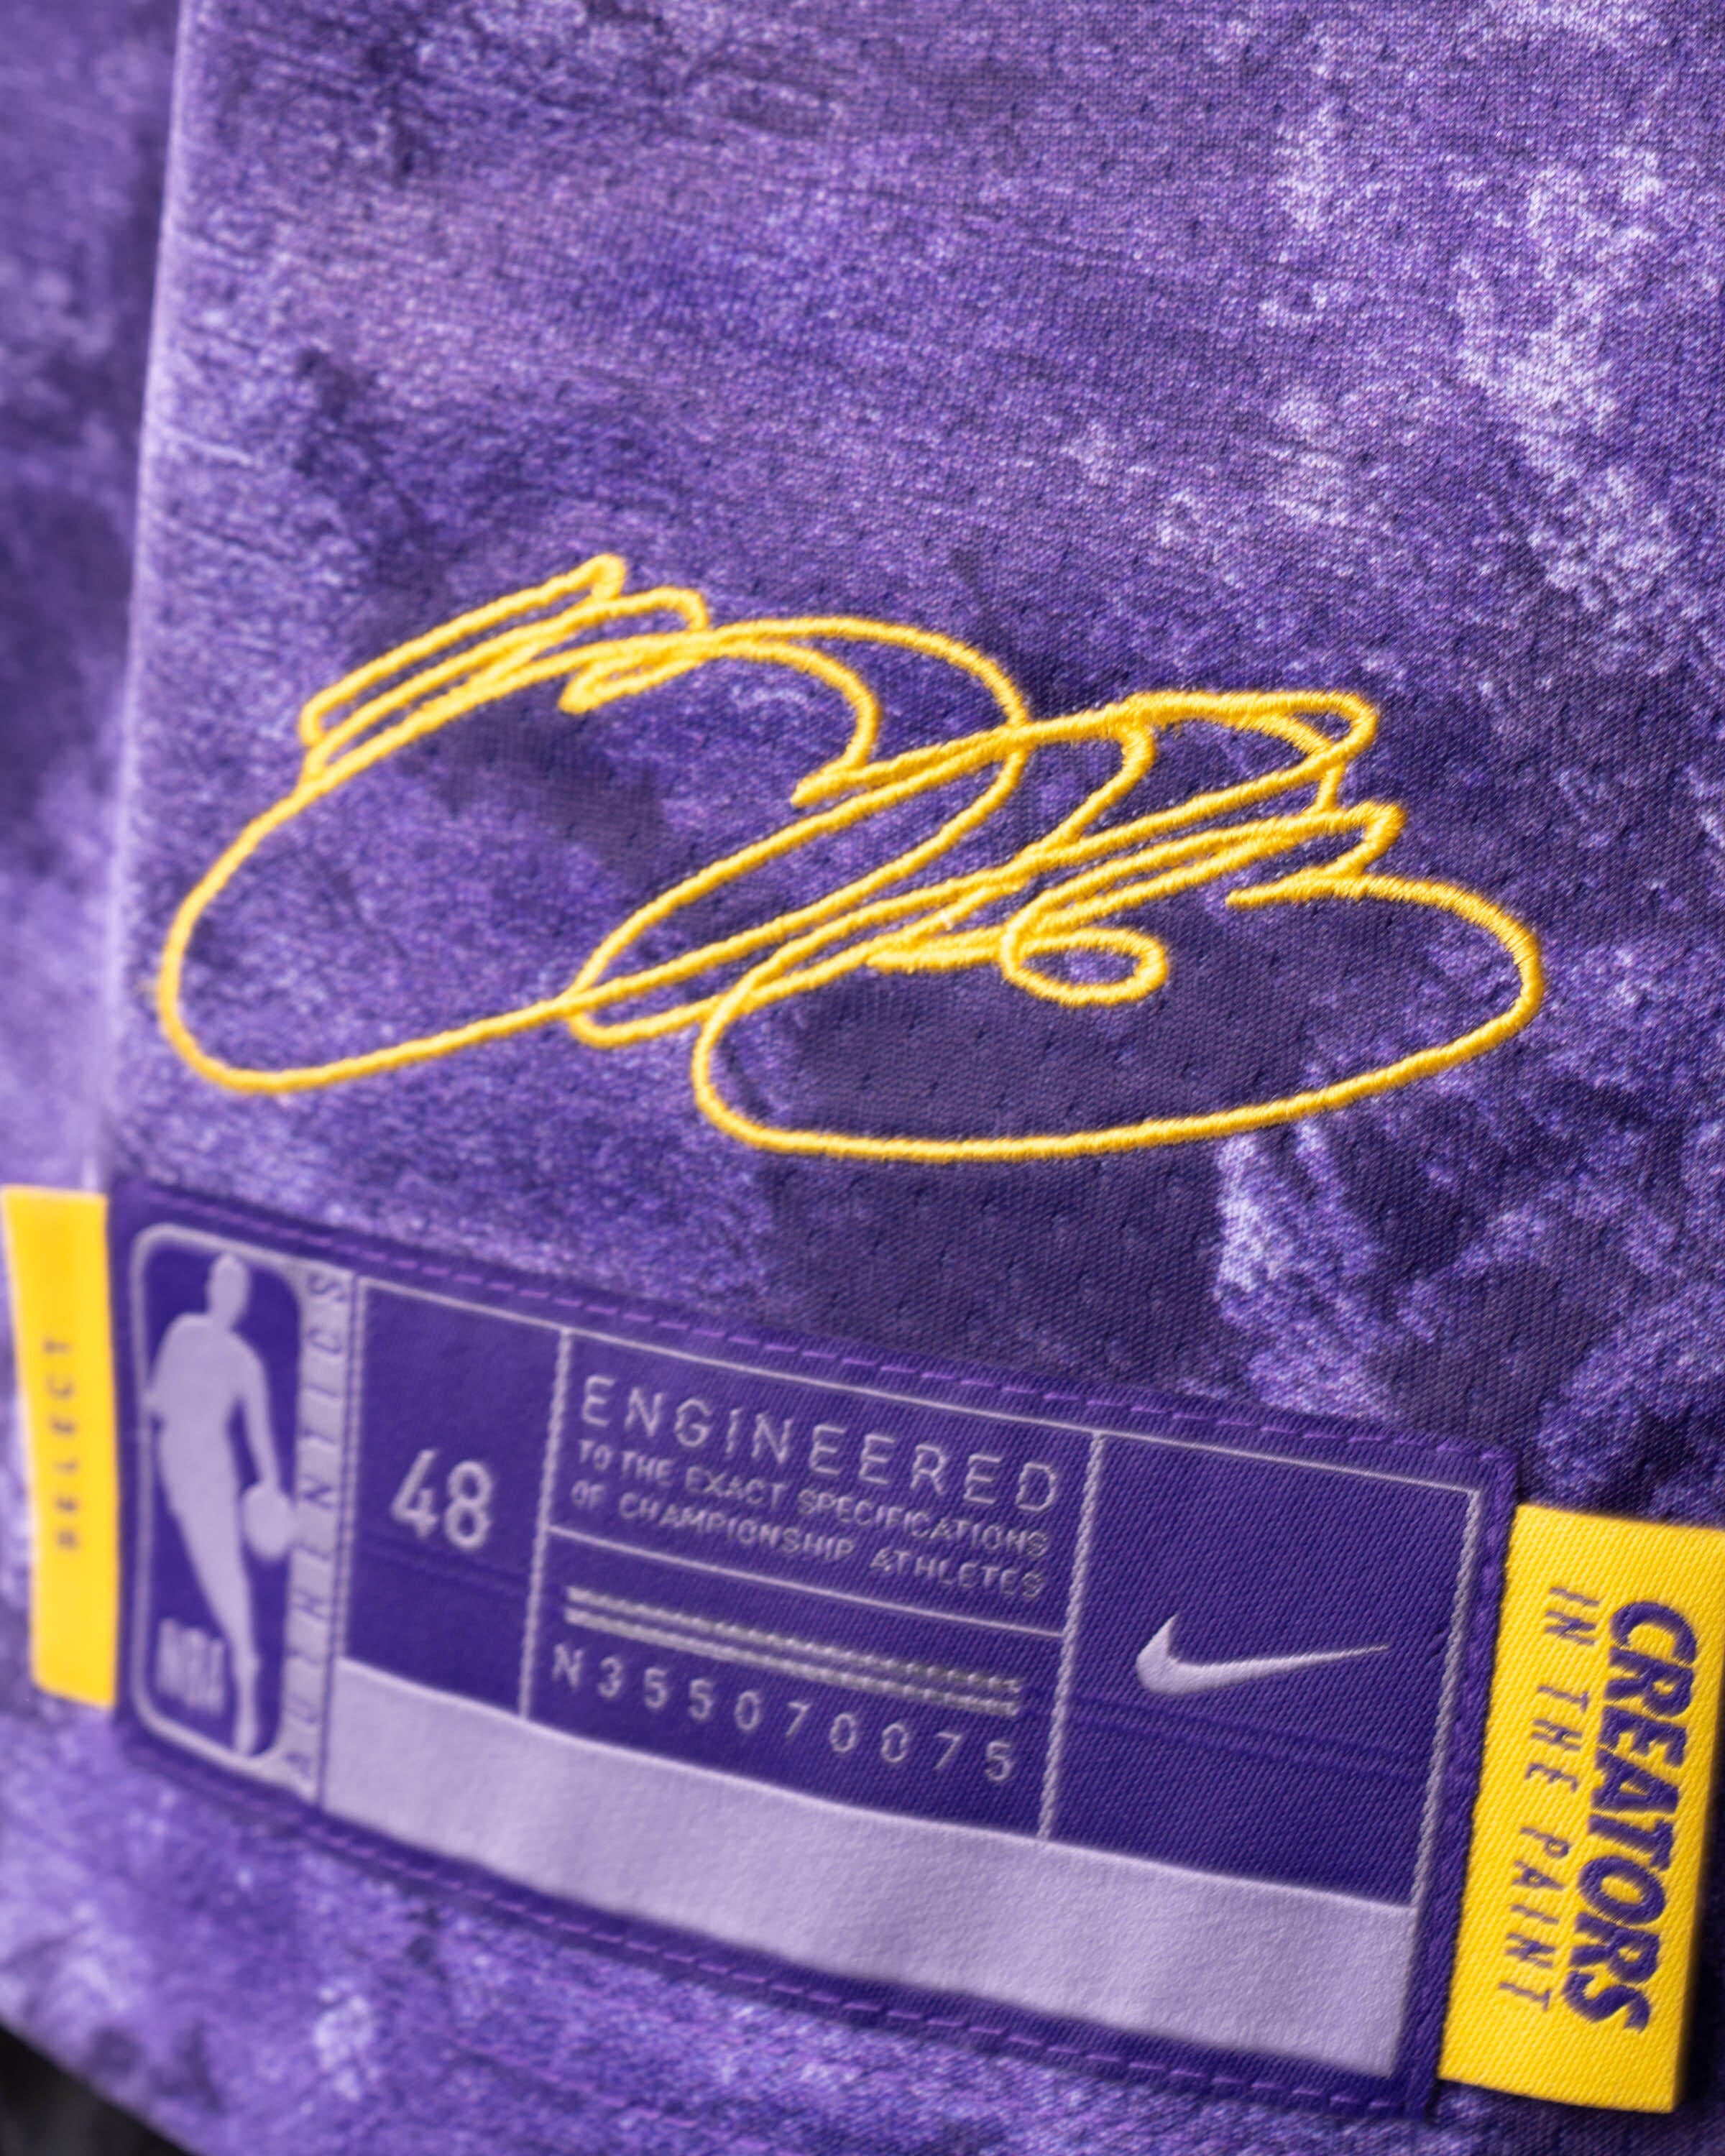 Nike LA LAKERS NBA City Edition Swingman Jersey - LEBRON JAMES Purple